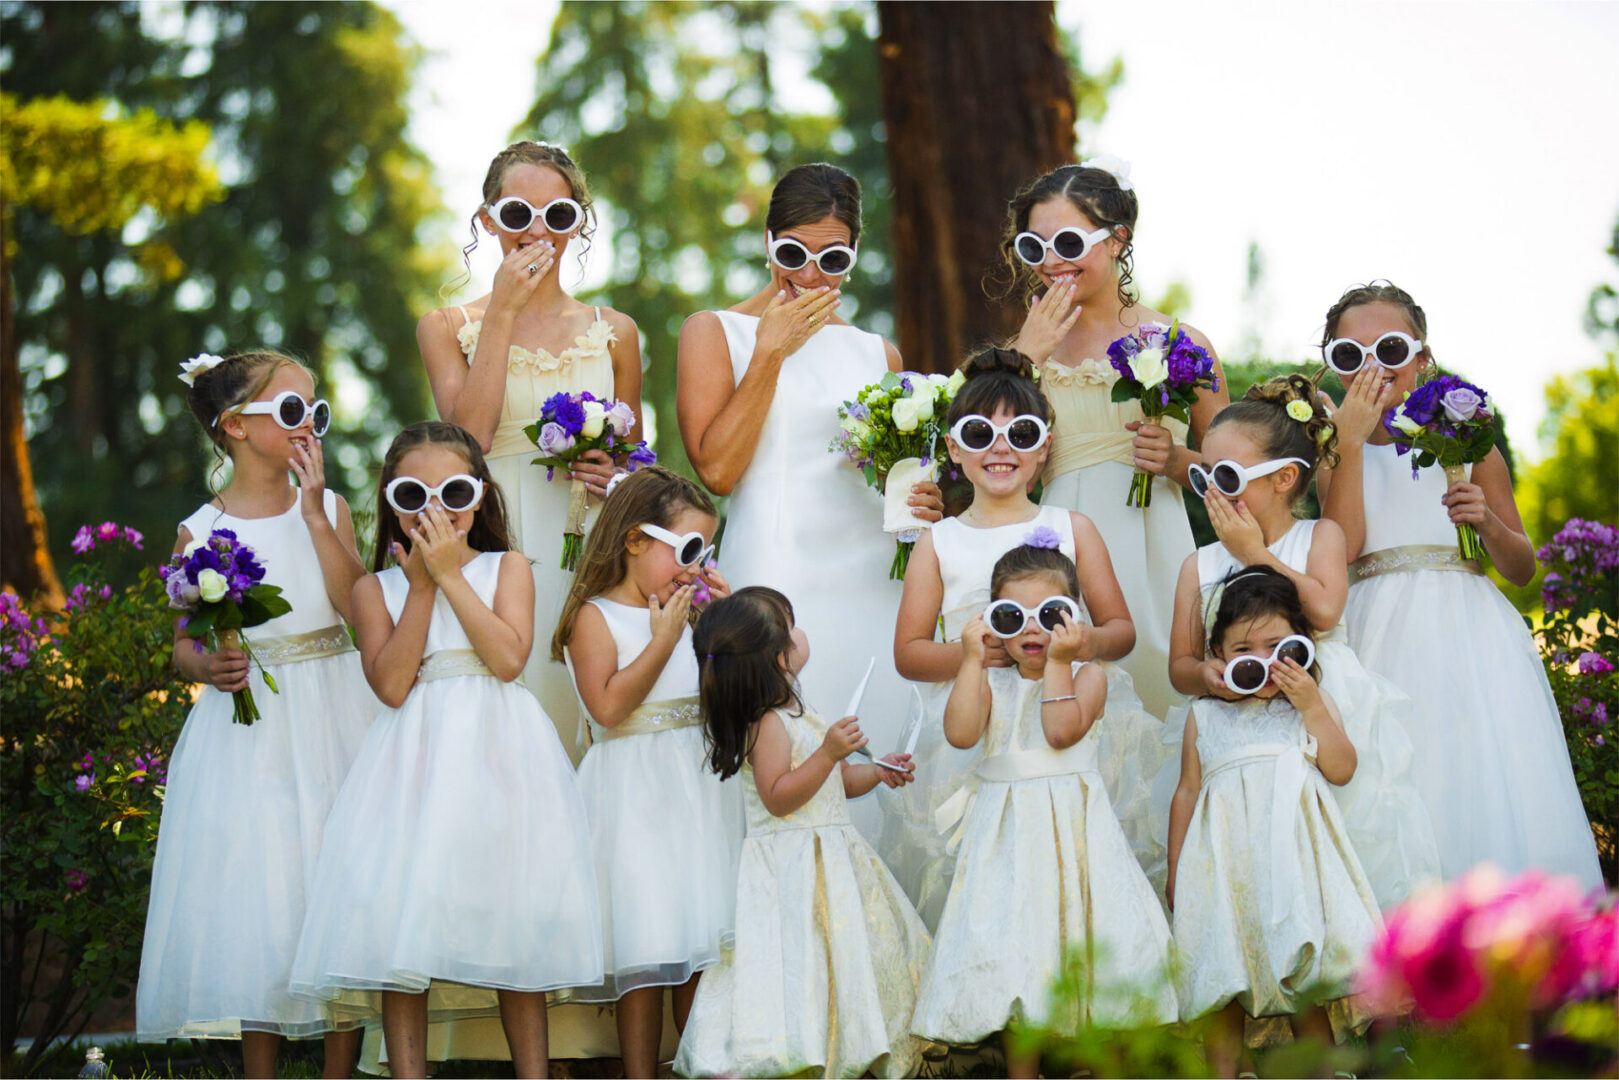 Children wearing the wedding dress